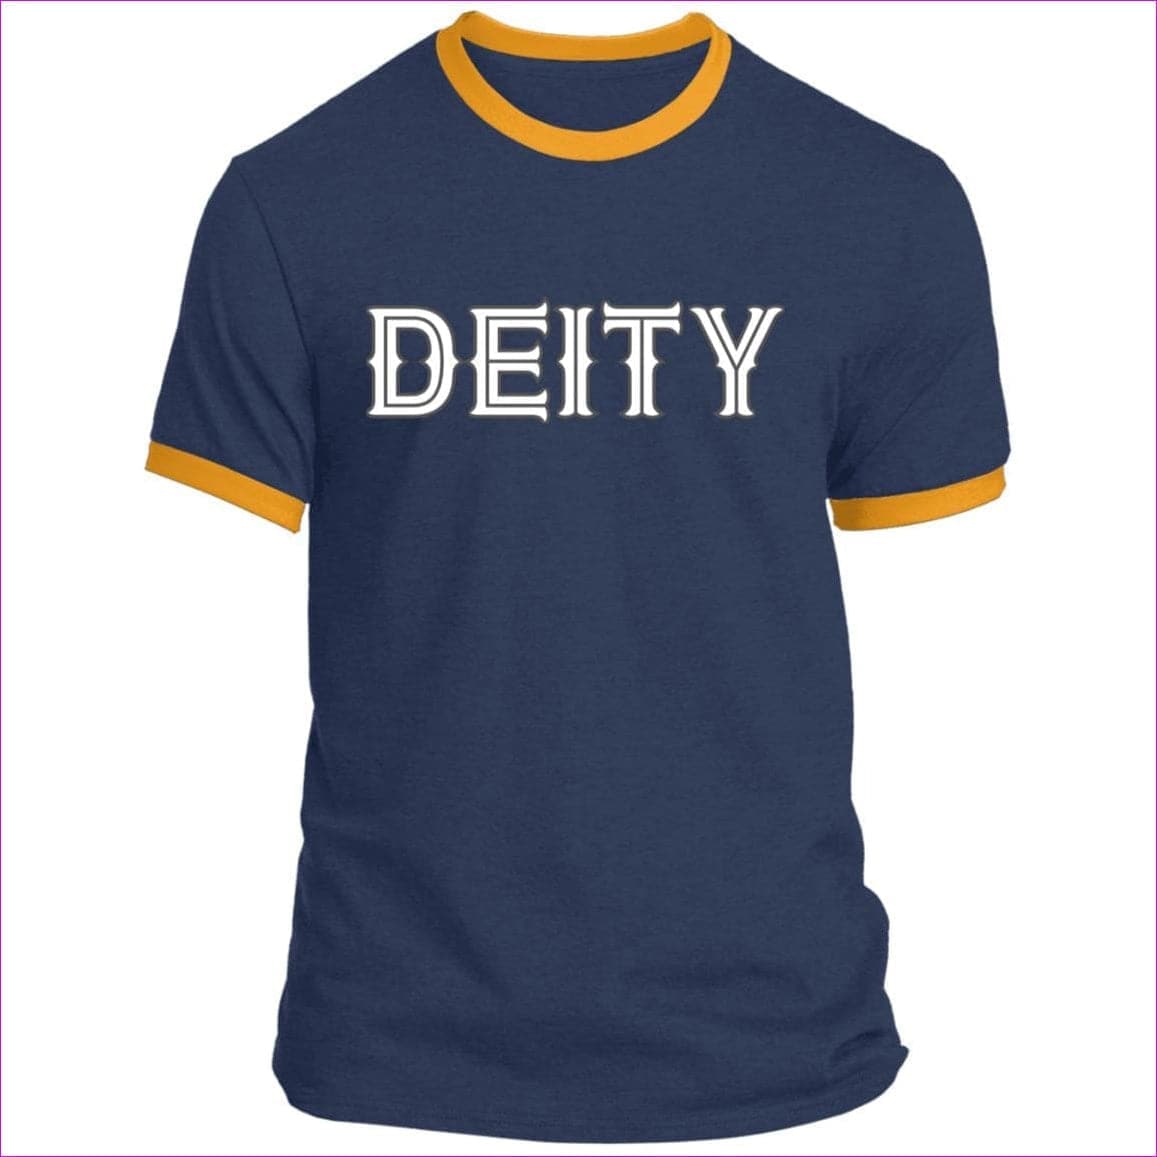 Navy Gold - Deity Men's Ringer Tee - Mens T-Shirts at TFC&H Co.